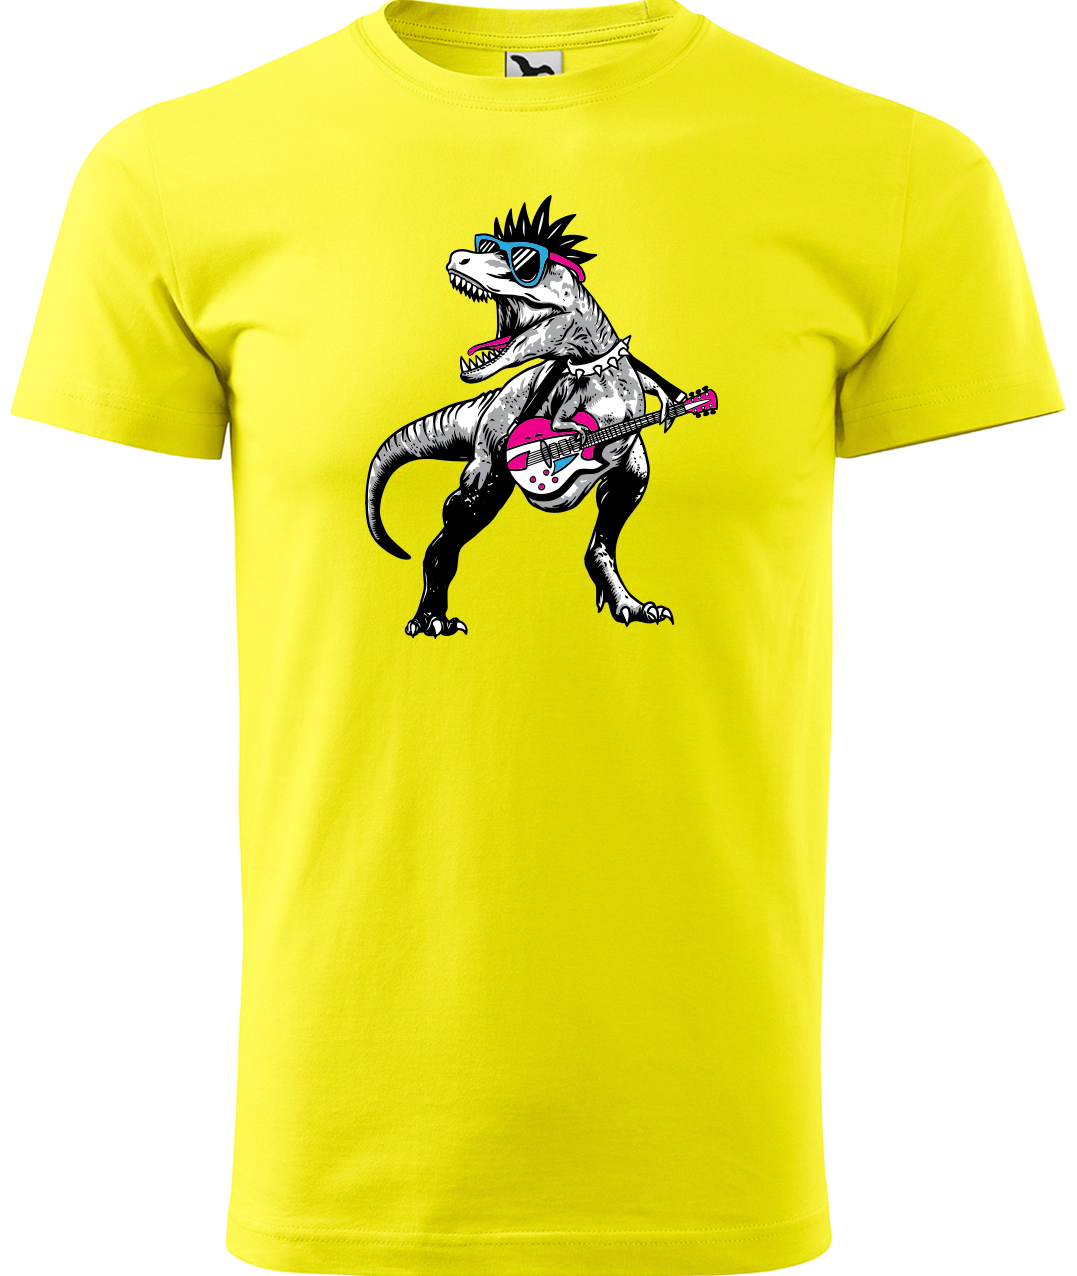 Tričko pro kytaristu - Dinosaurus s kytarou Velikost: XL, Barva: Žlutá (04)